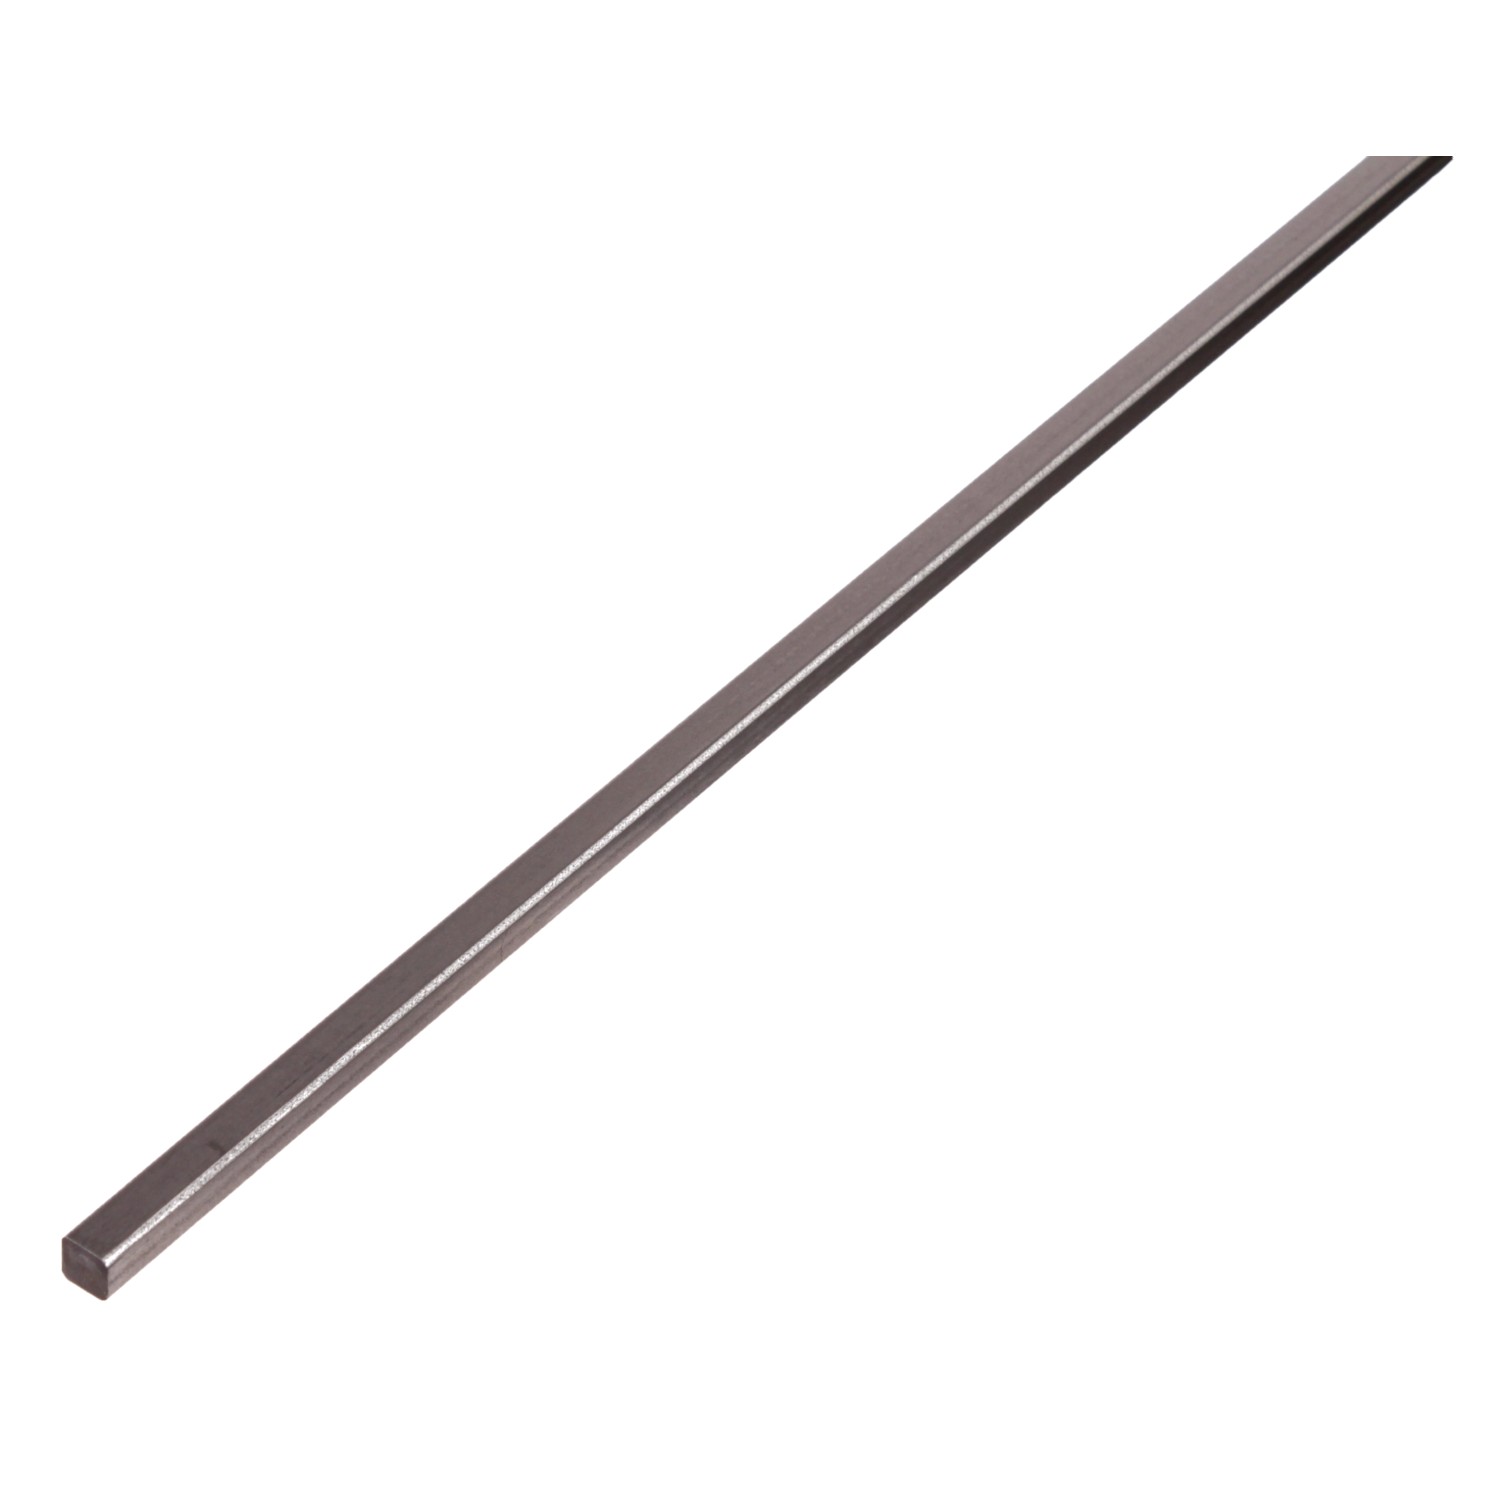 Vierkantstange Stahl 12 mm x 12 mm x 1000 mm